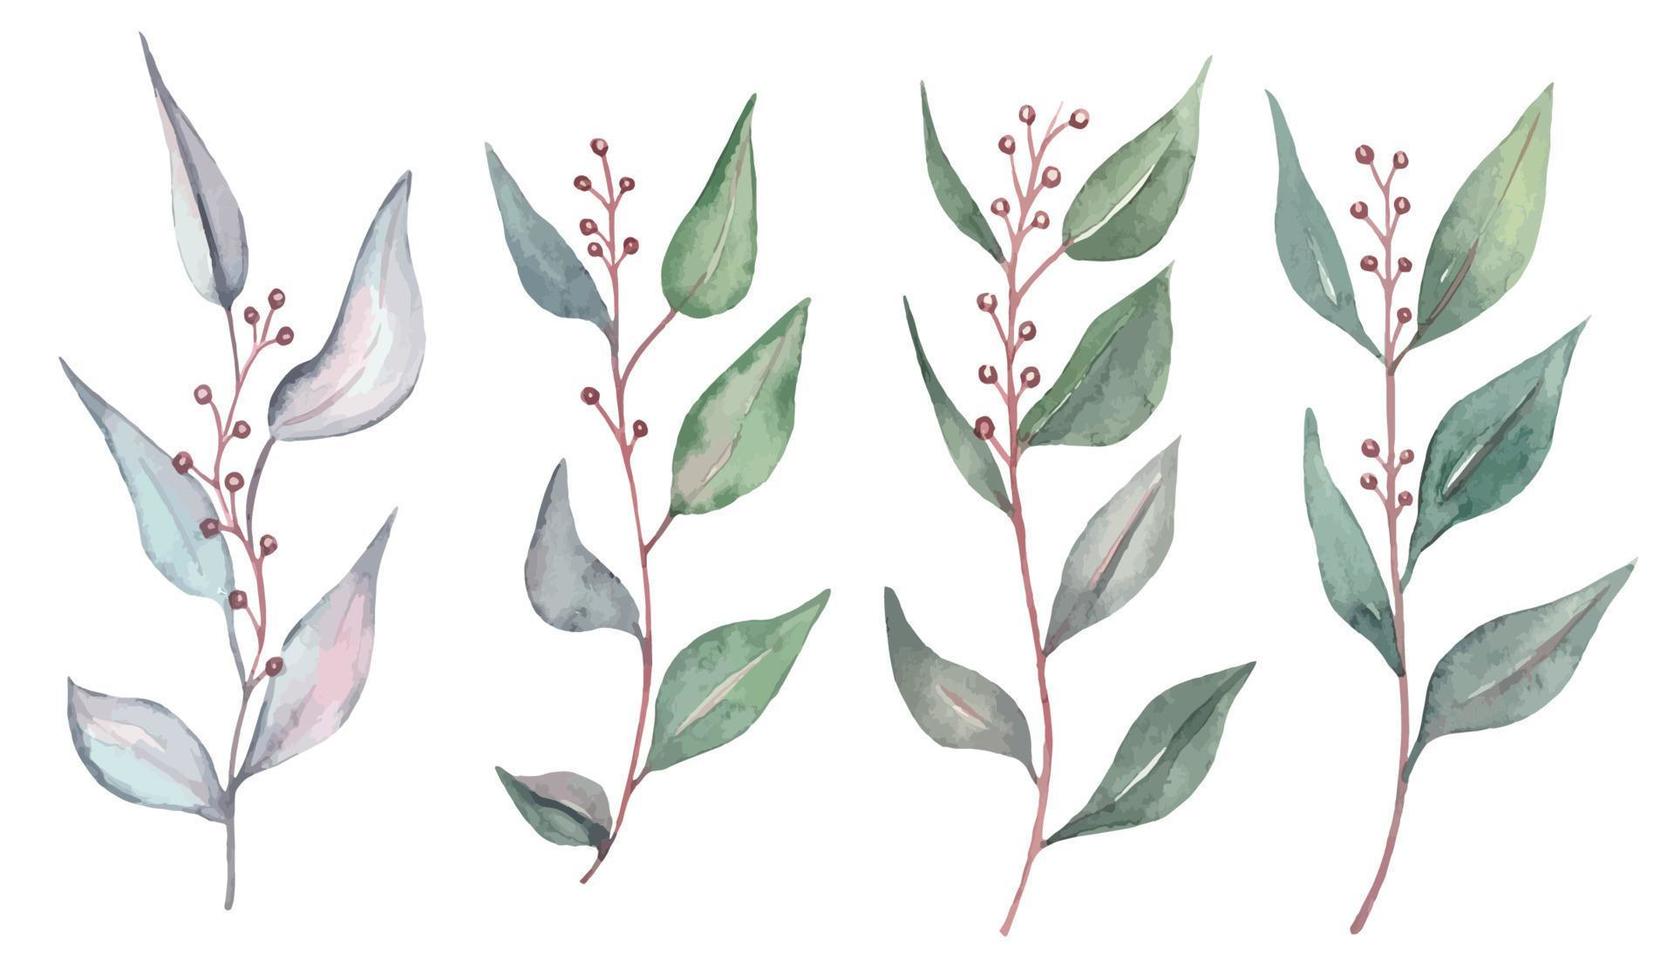 sammlung von grünen blättern, eukalyptus, grünen blättern. aquarellillustration vektor